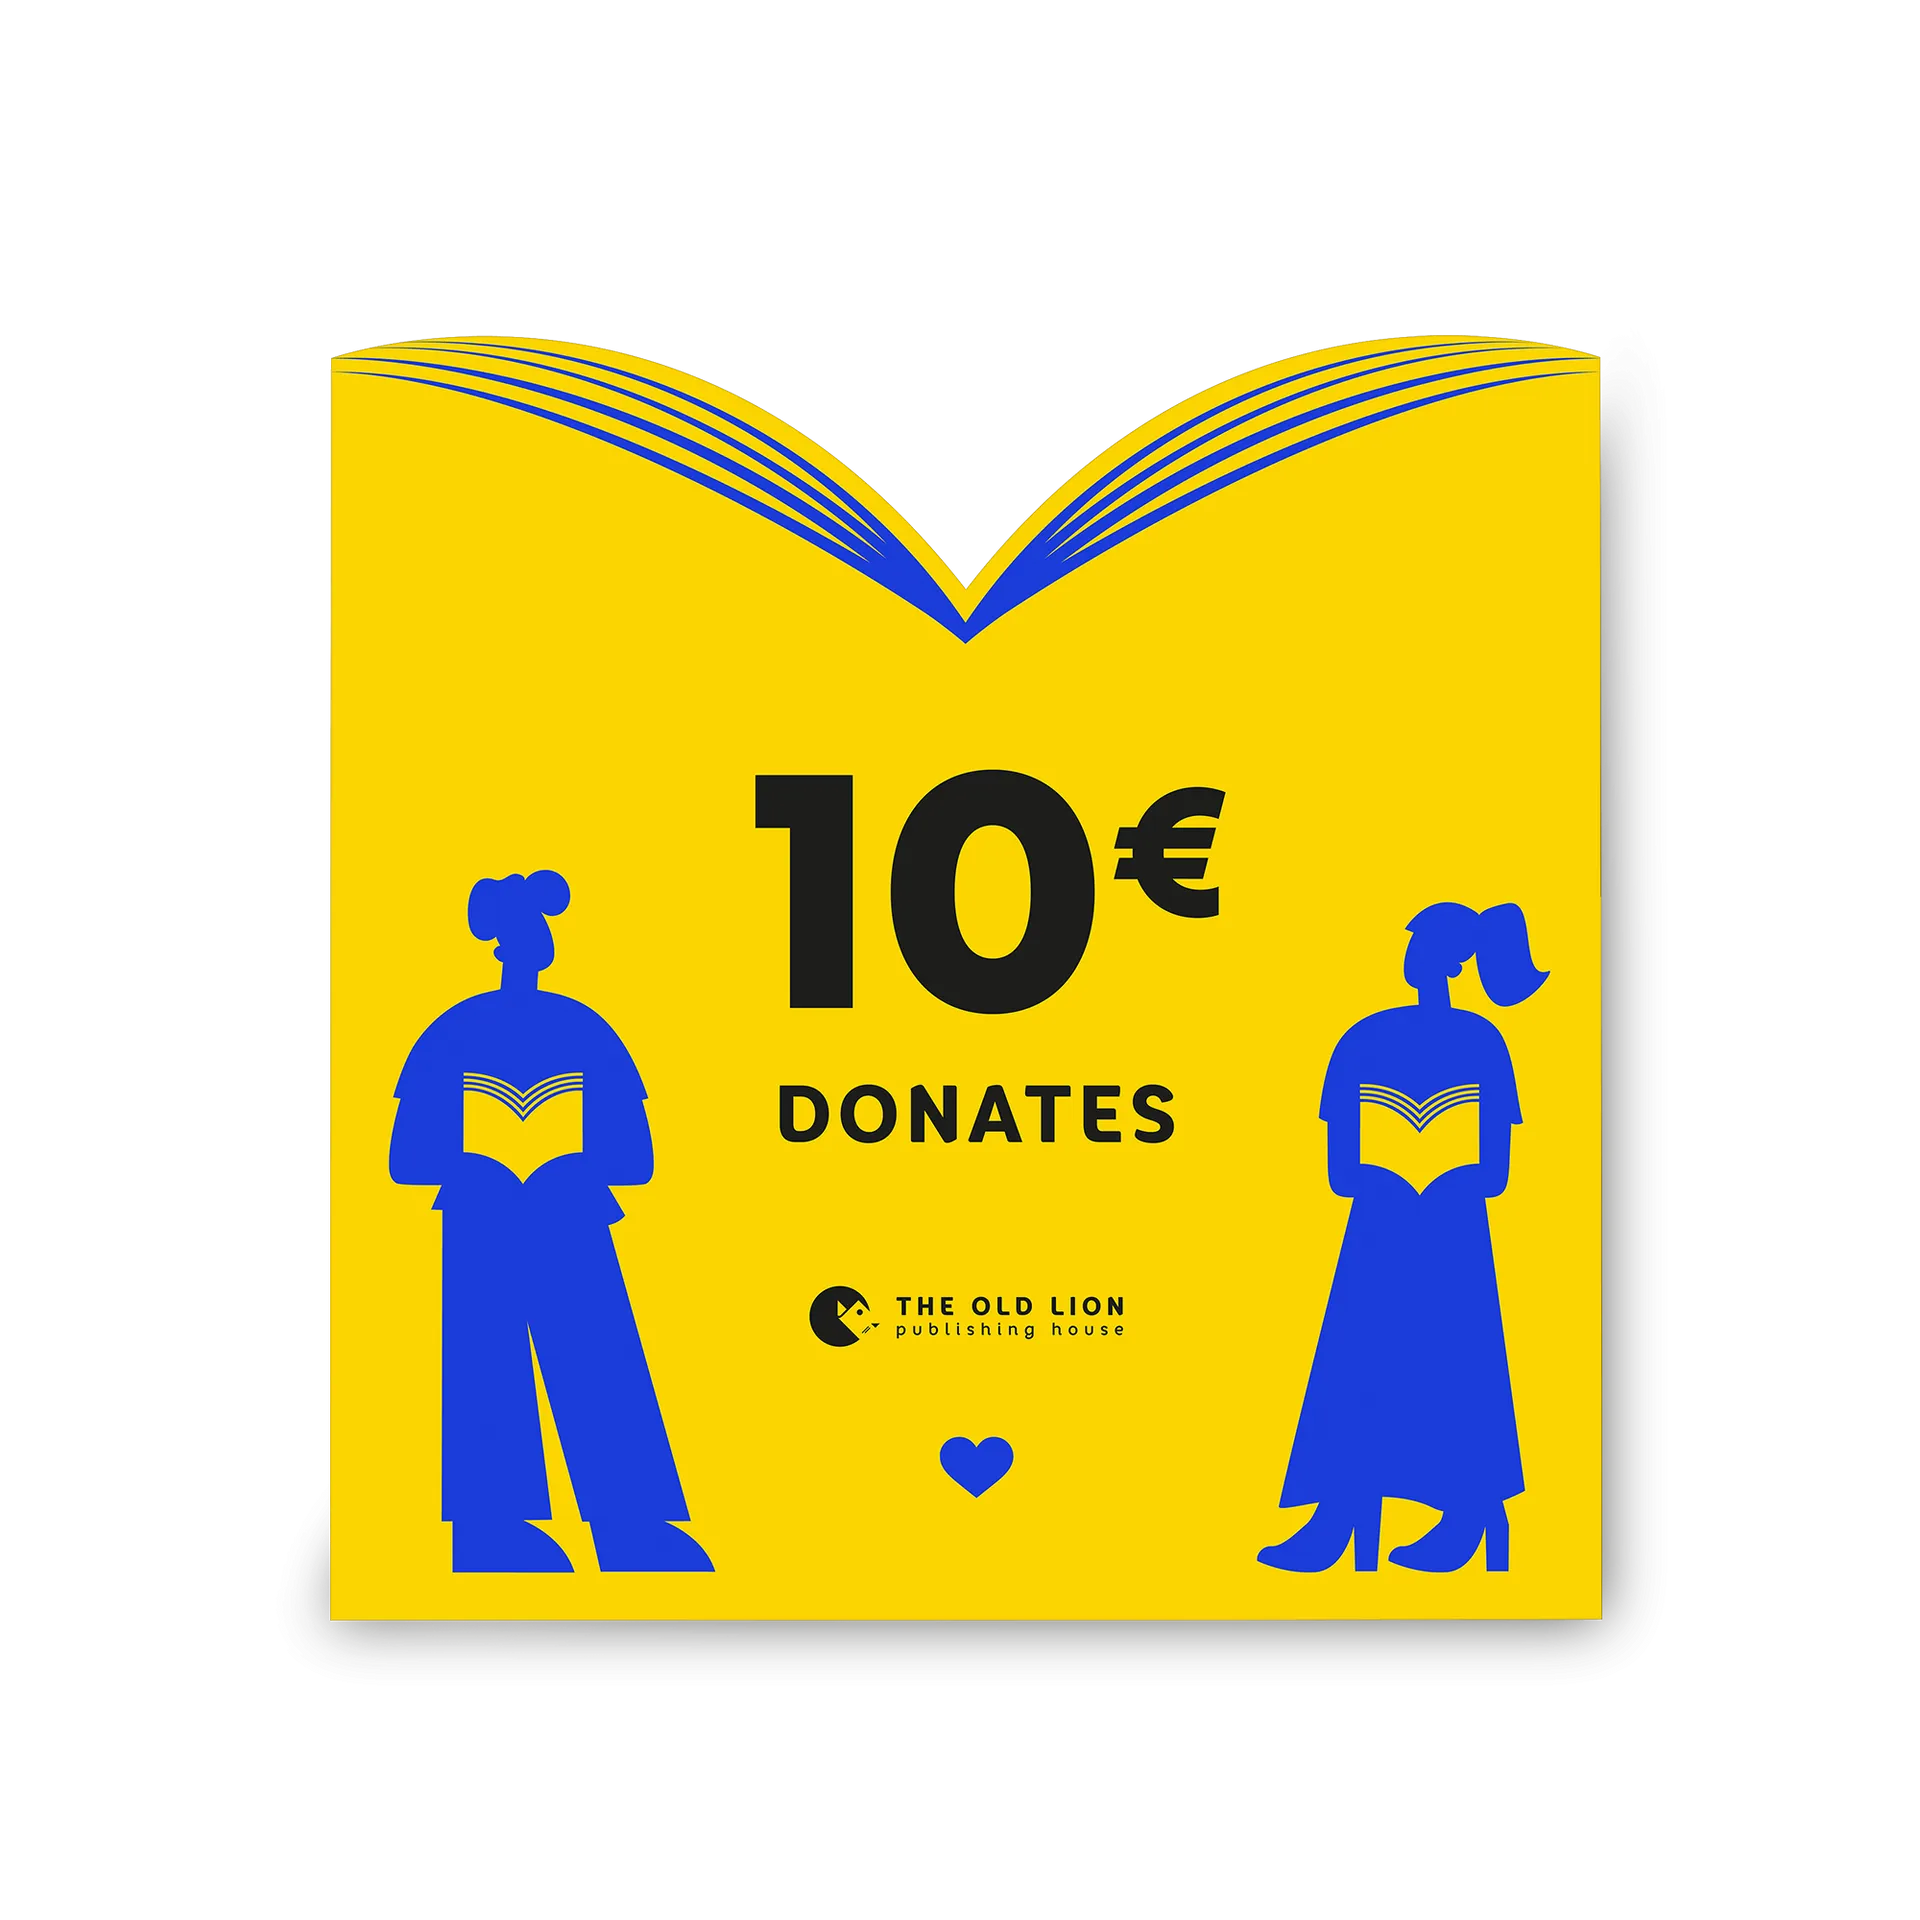 Donates 10 EUR